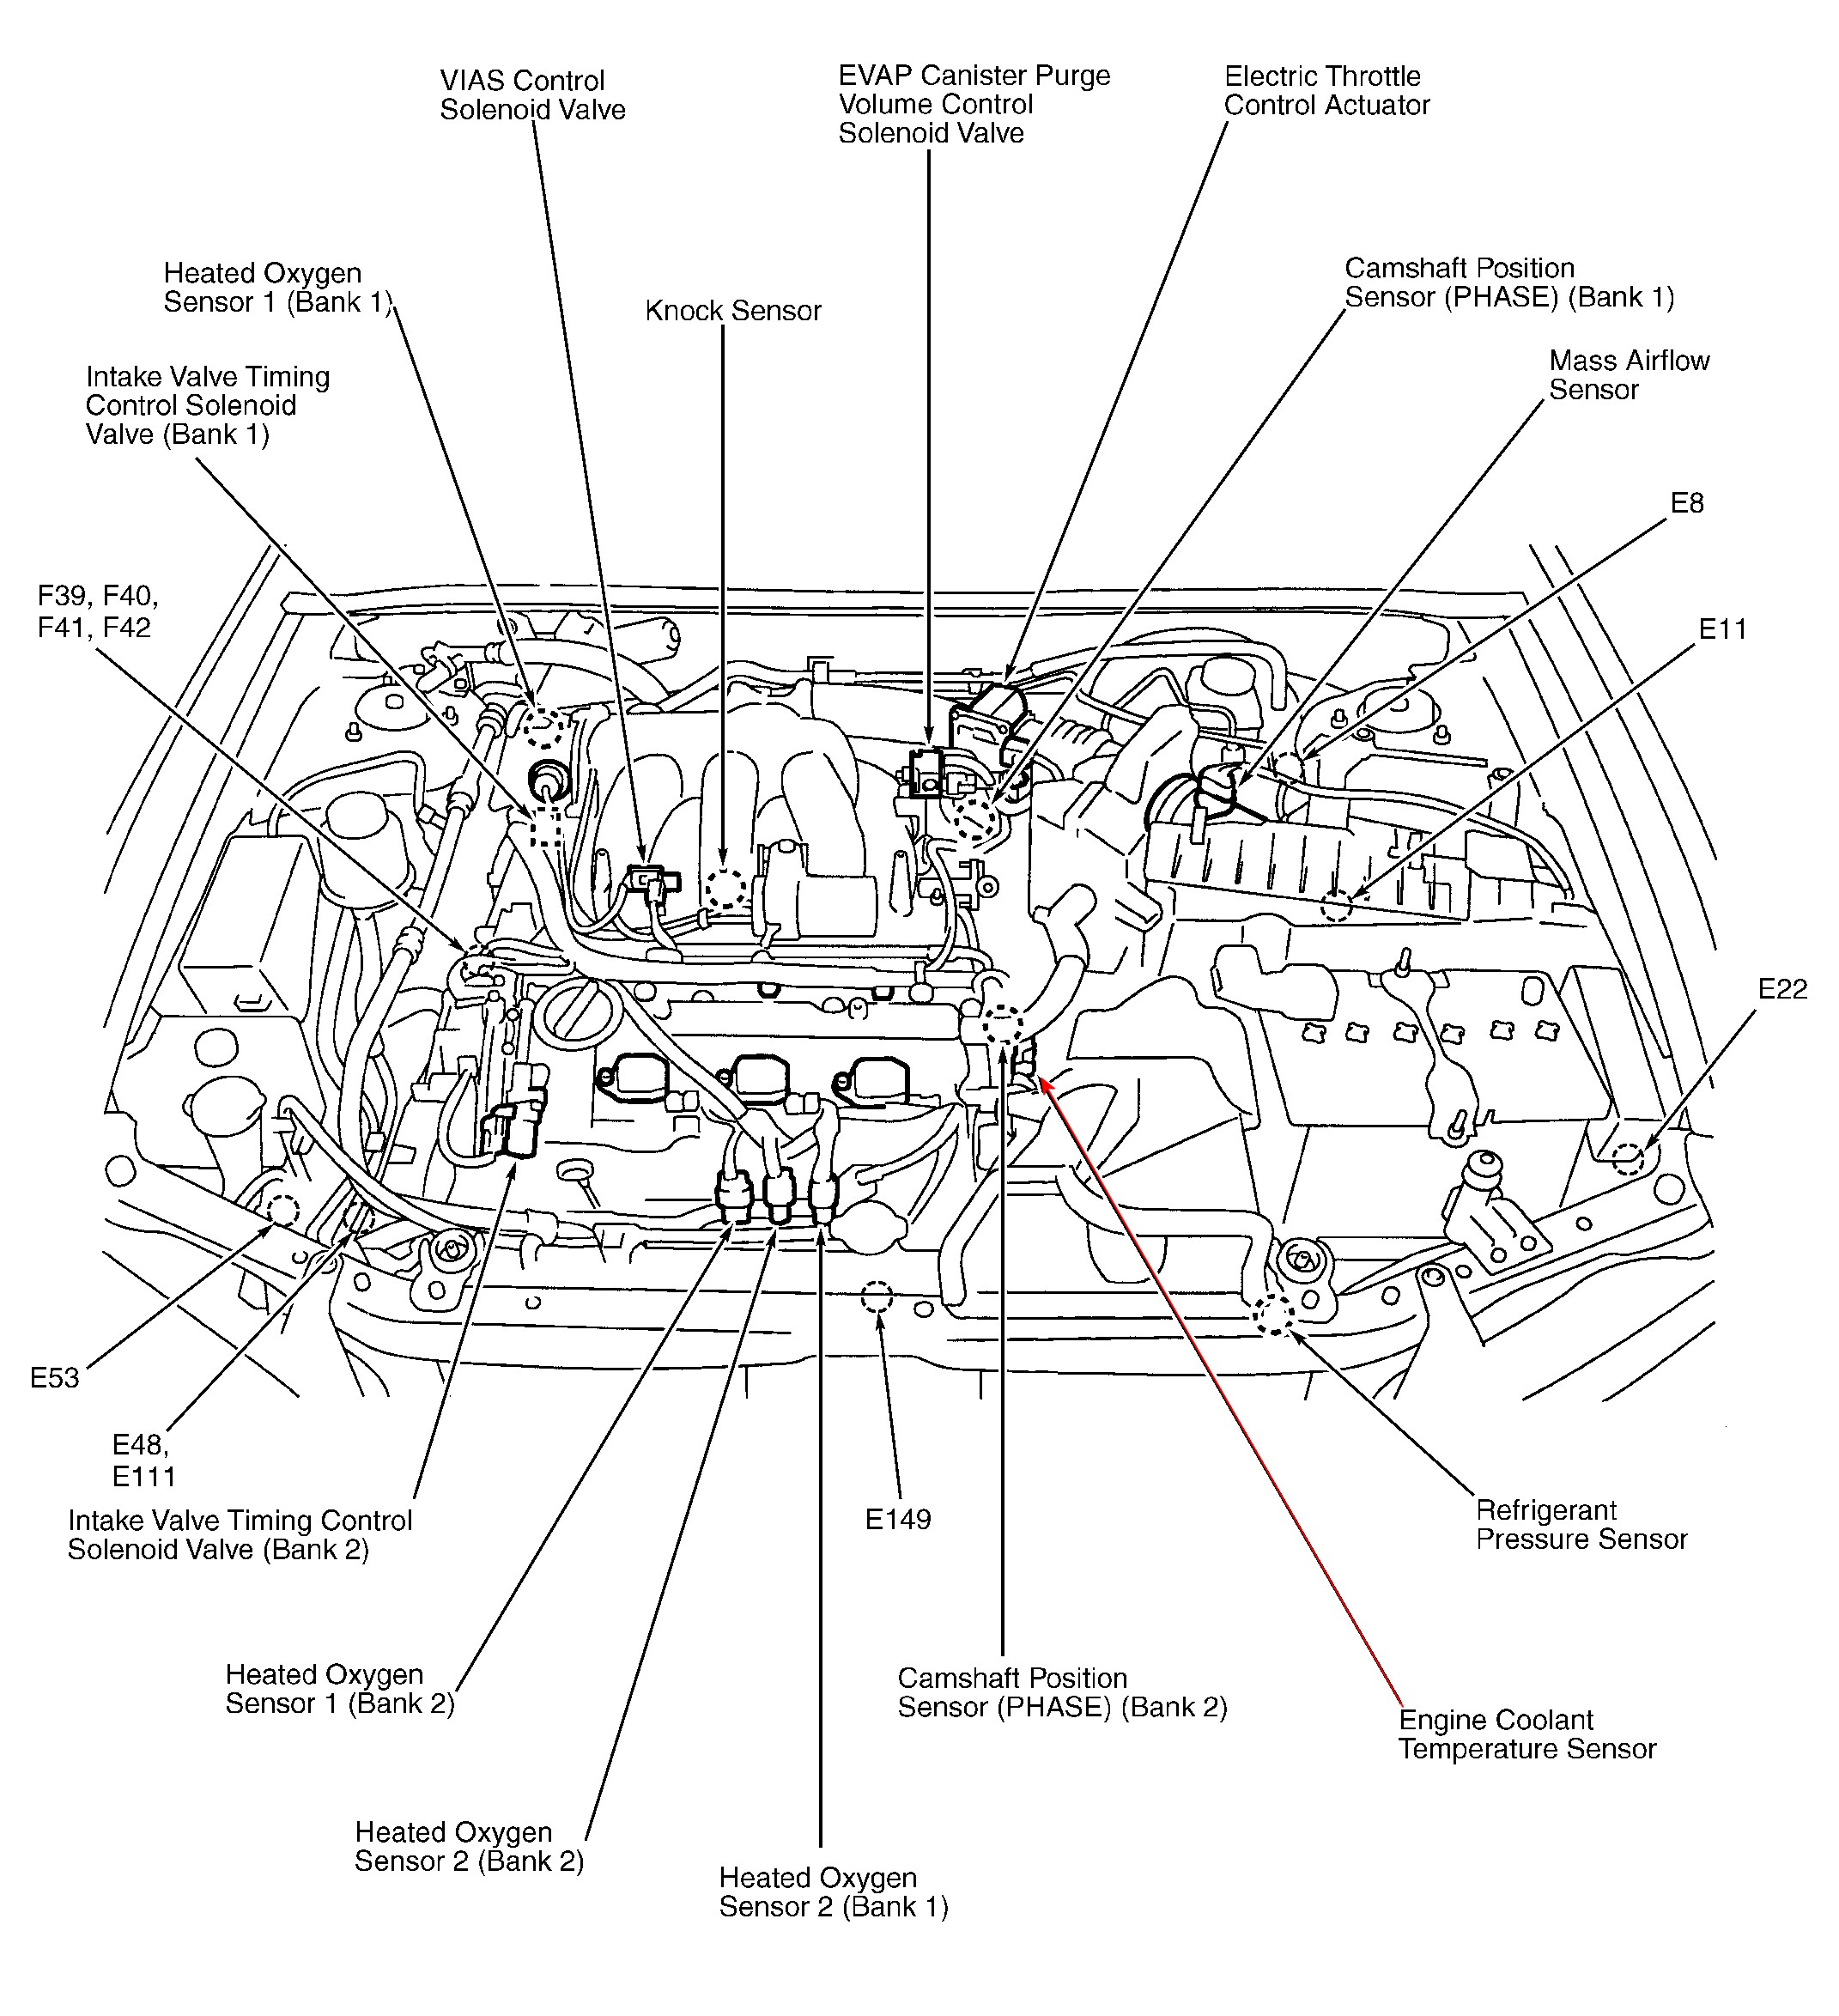 2010 Nissan Altima Engine Diagram Wiring Diagram Moreover 2001 Nissan Maxima Exhaust System Diagram Of 2010 Nissan Altima Engine Diagram